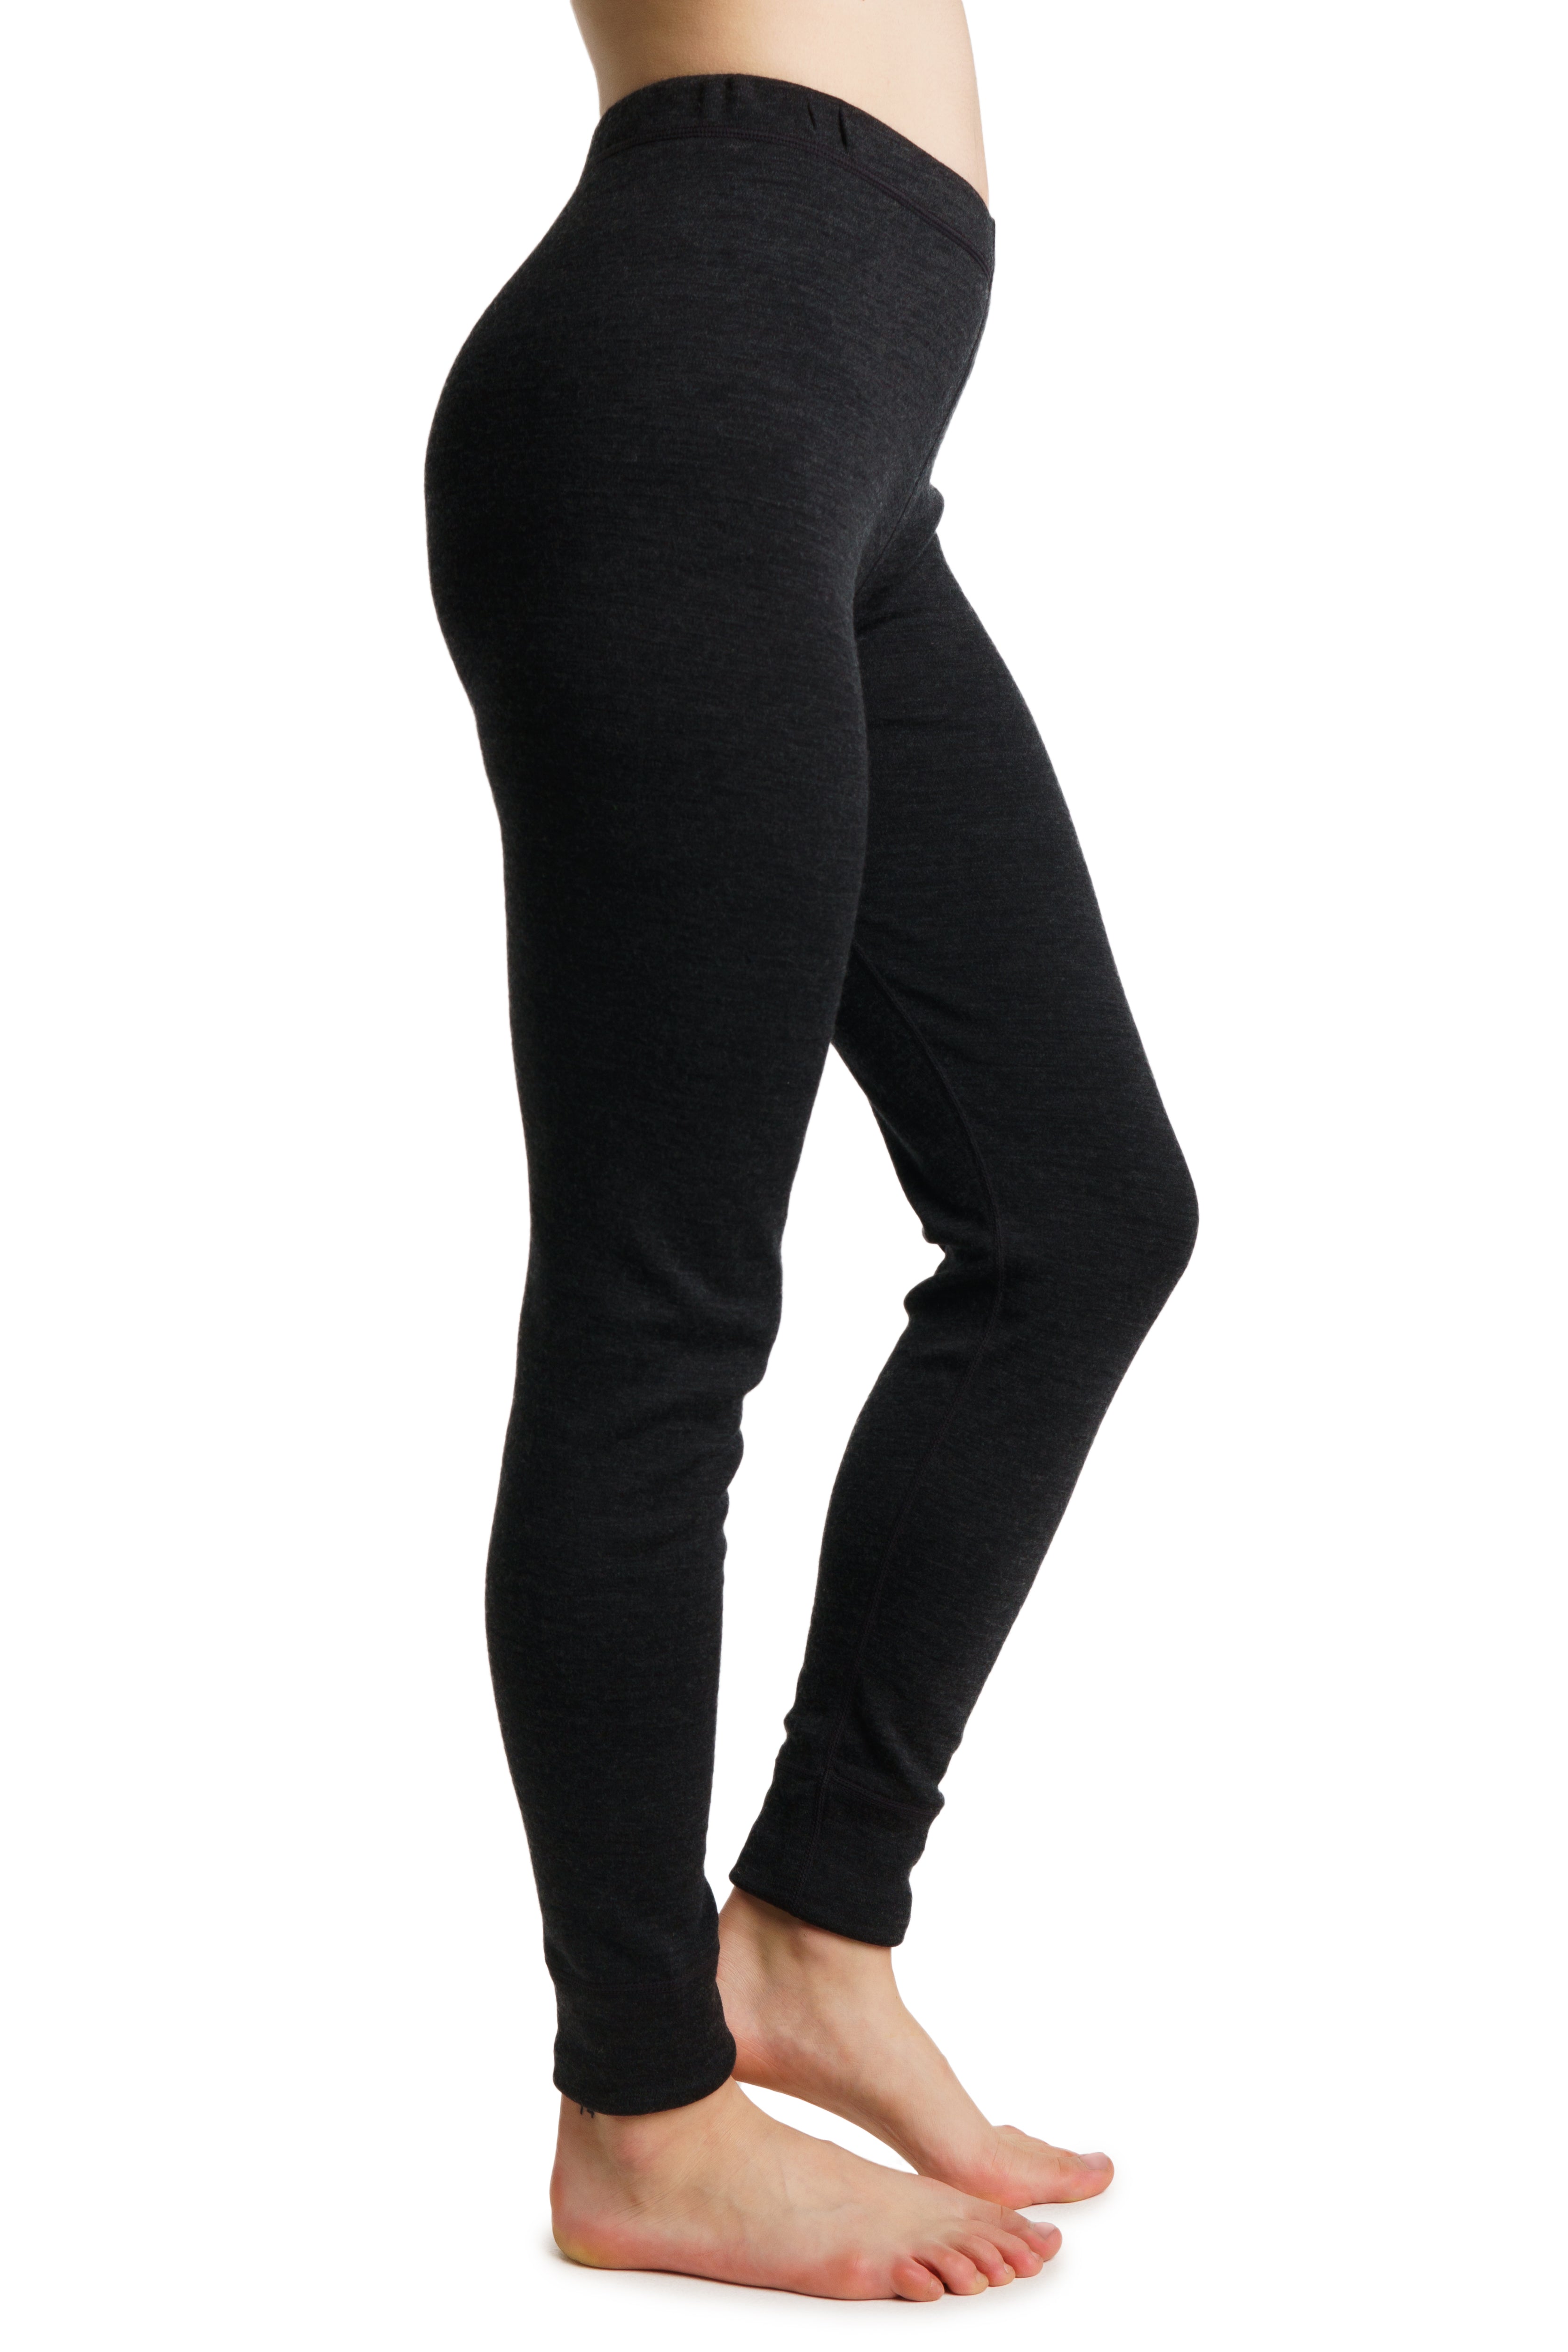 Women's Merino Wool Pants - Base Layer Charcoal Grey, Bottom, Underwear, Thermal  Leggings, Midweight